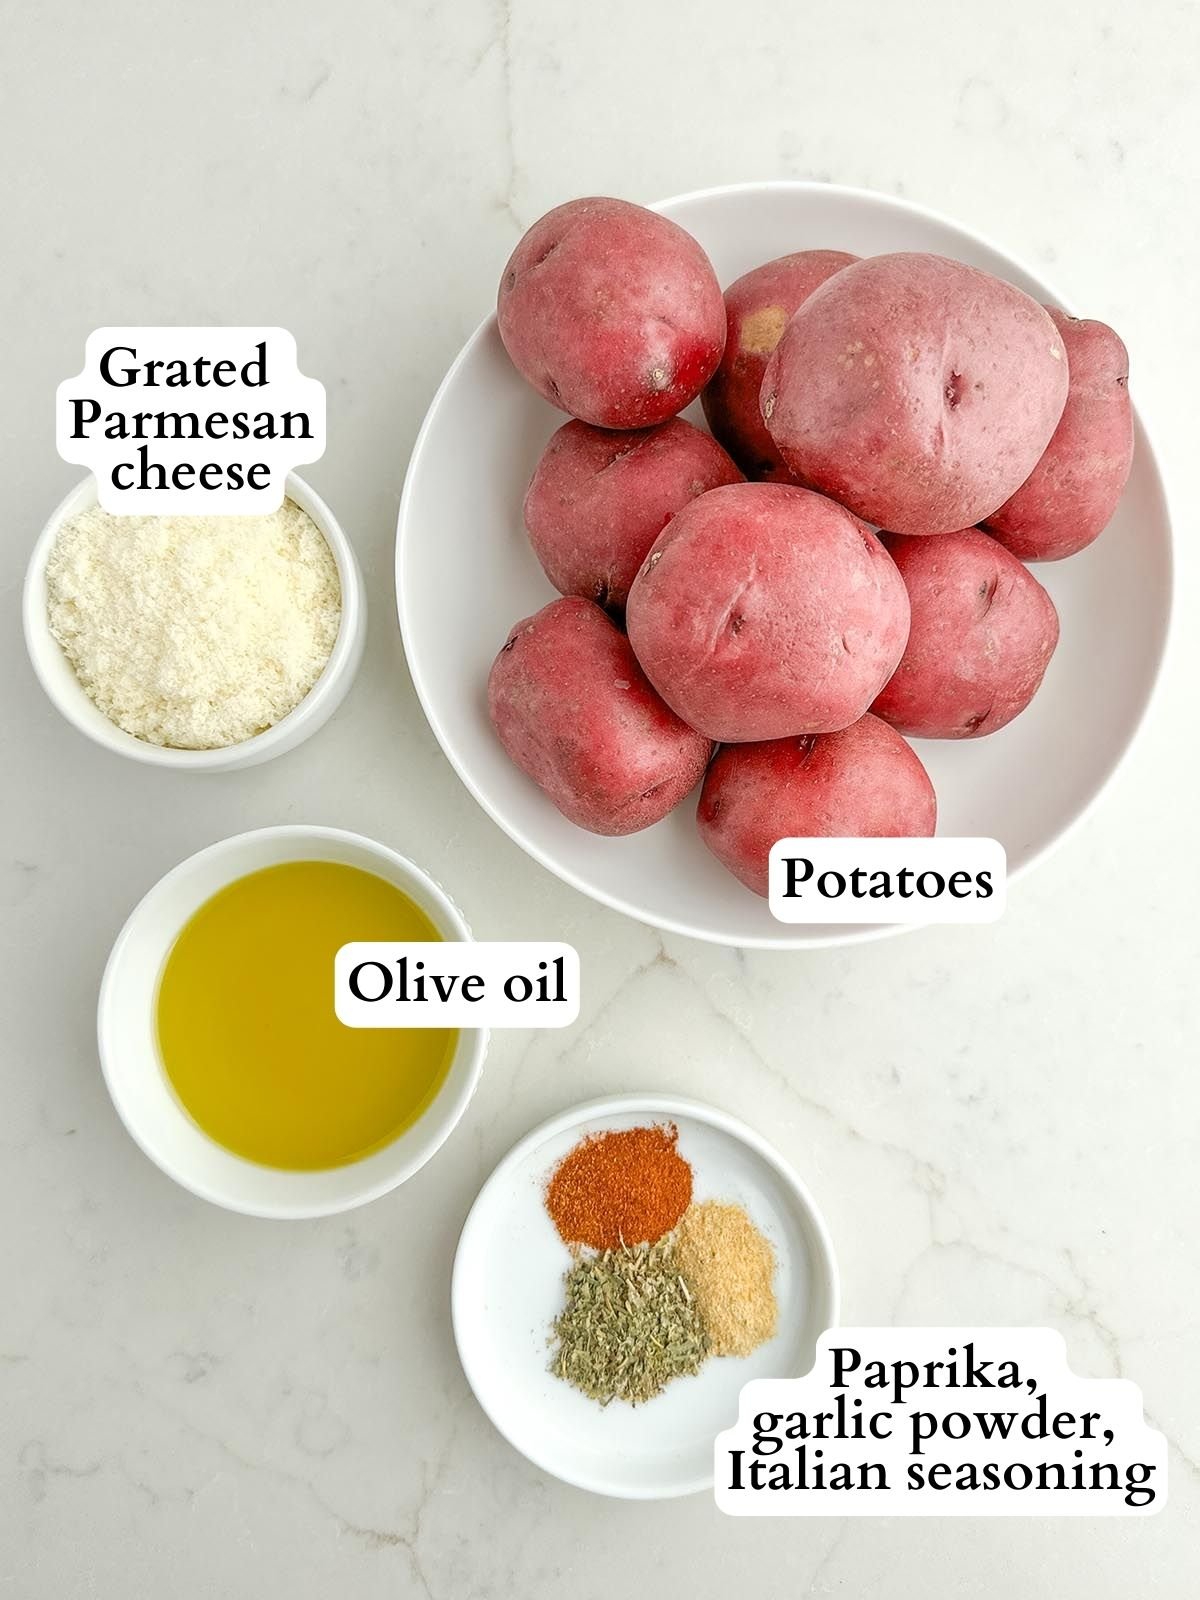 lipton onion soup mix potato recipe ingredients.